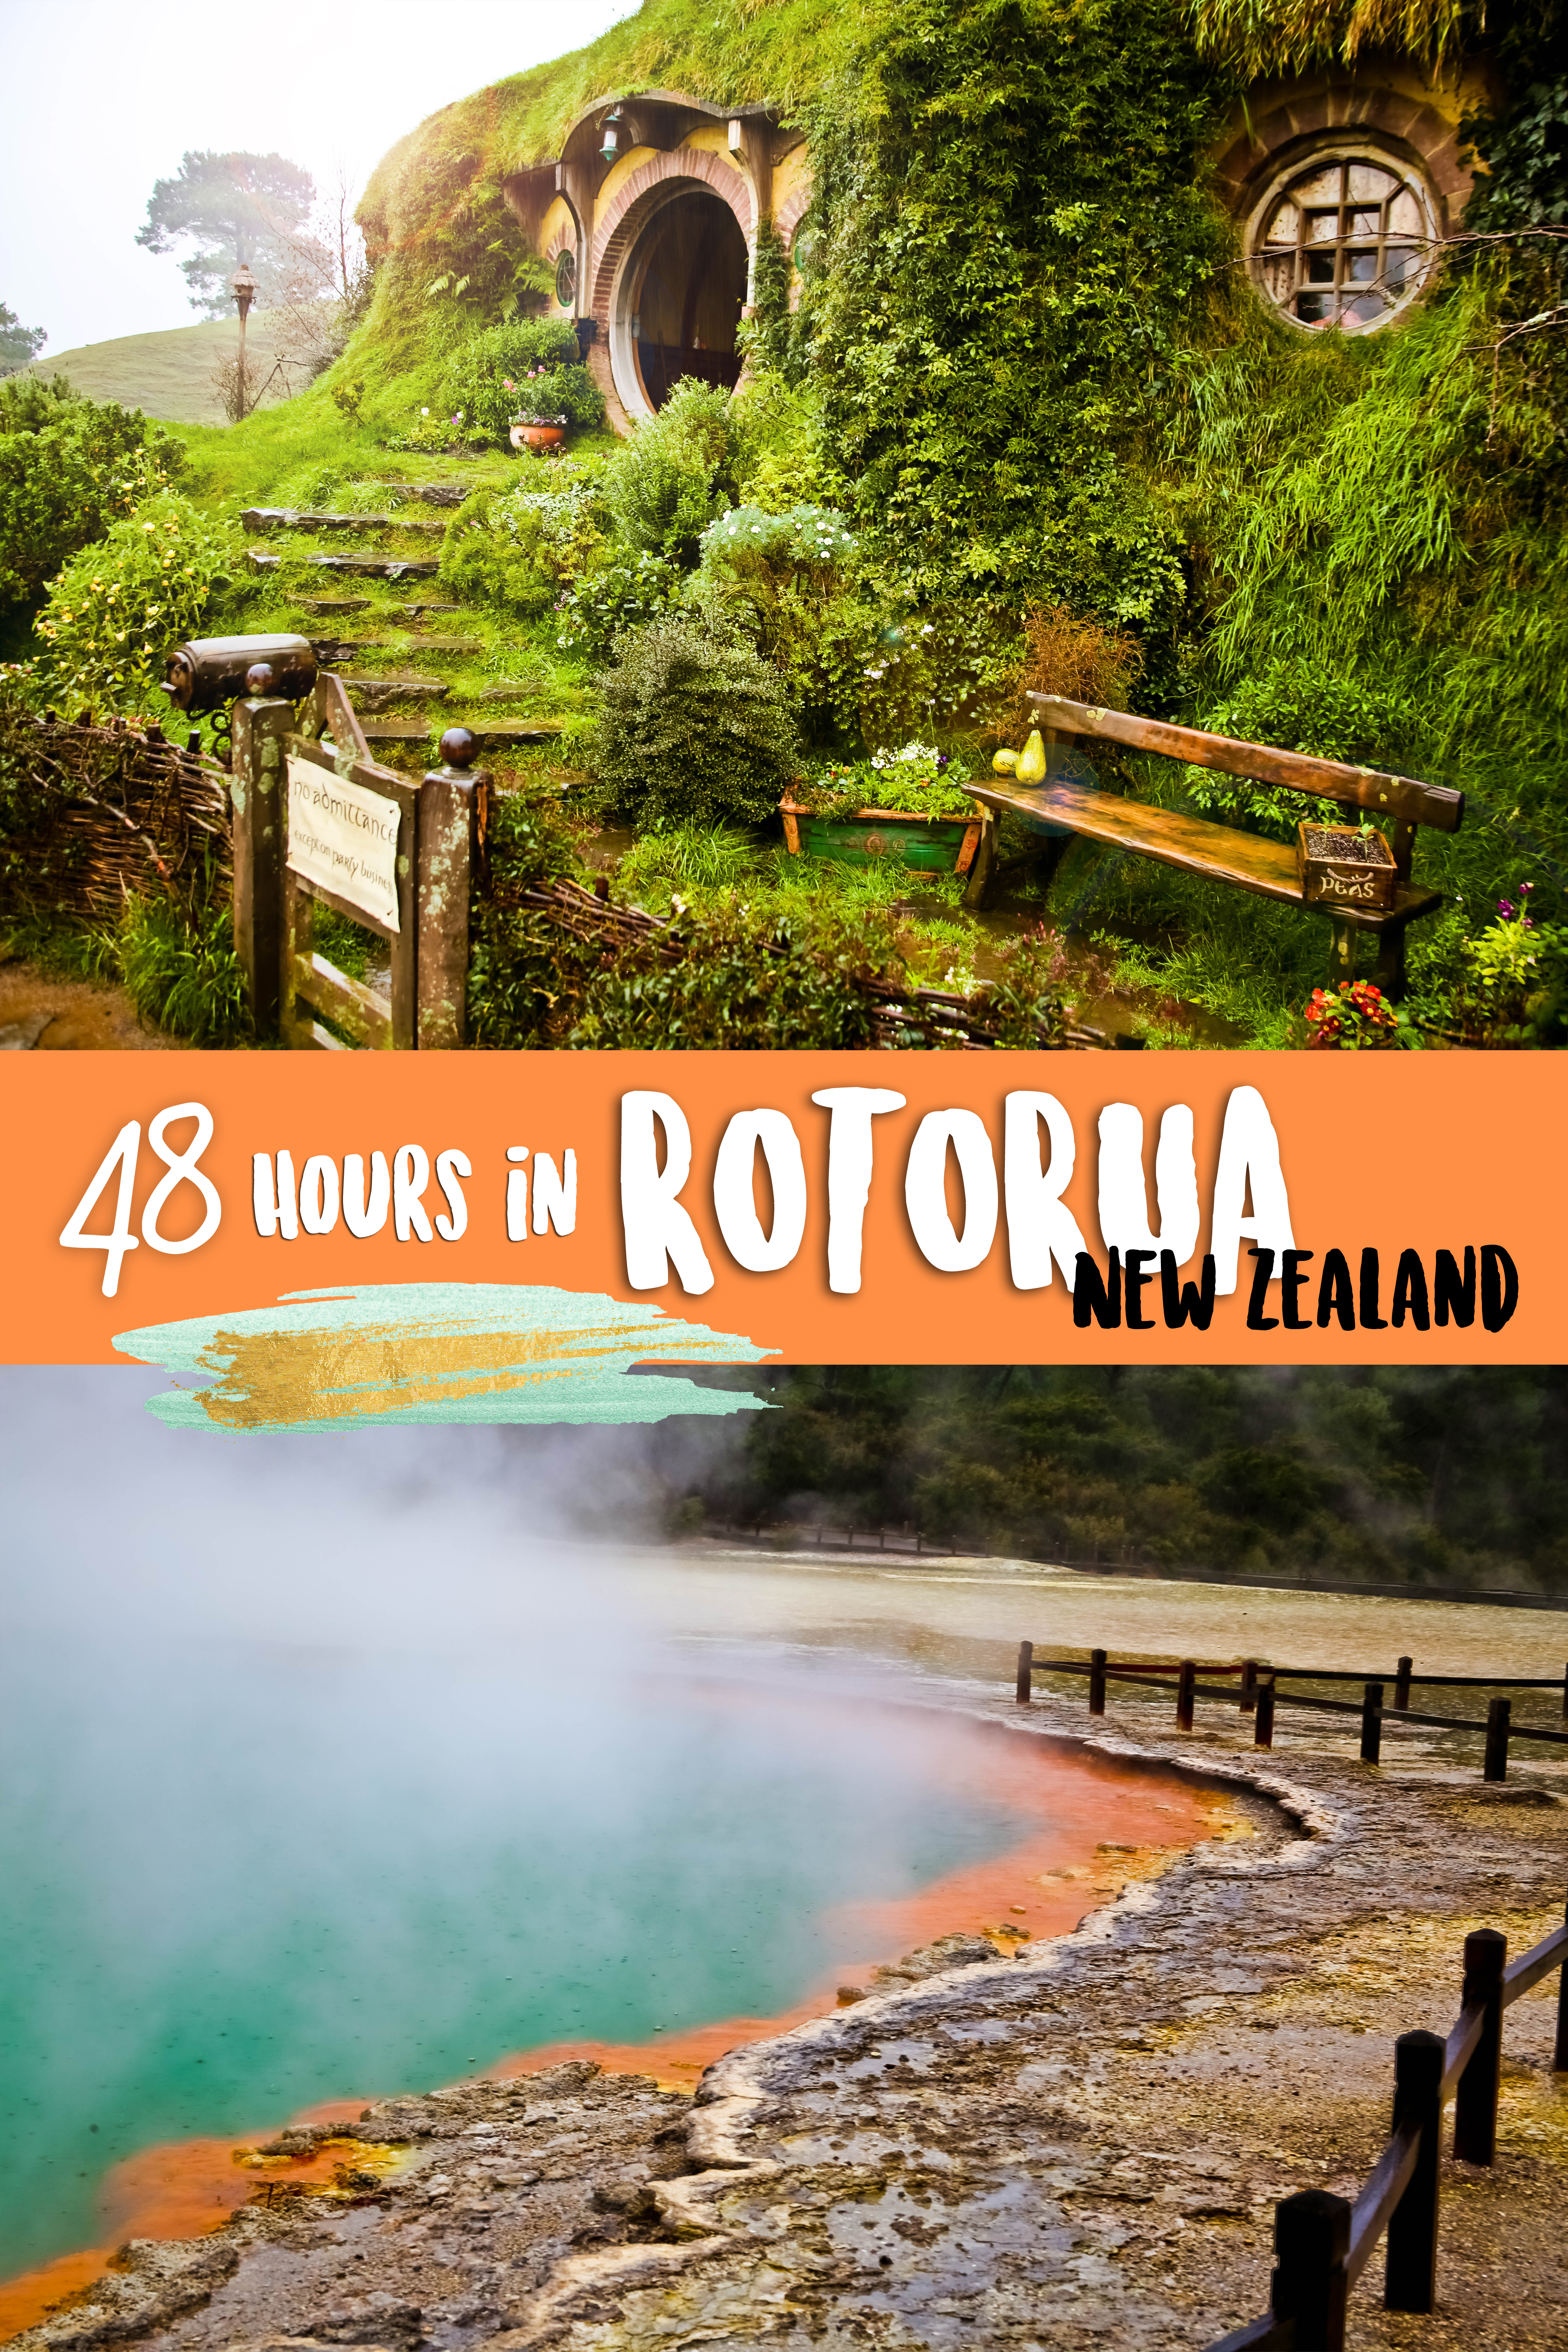 48 Hours in Rotorua, New Zealand